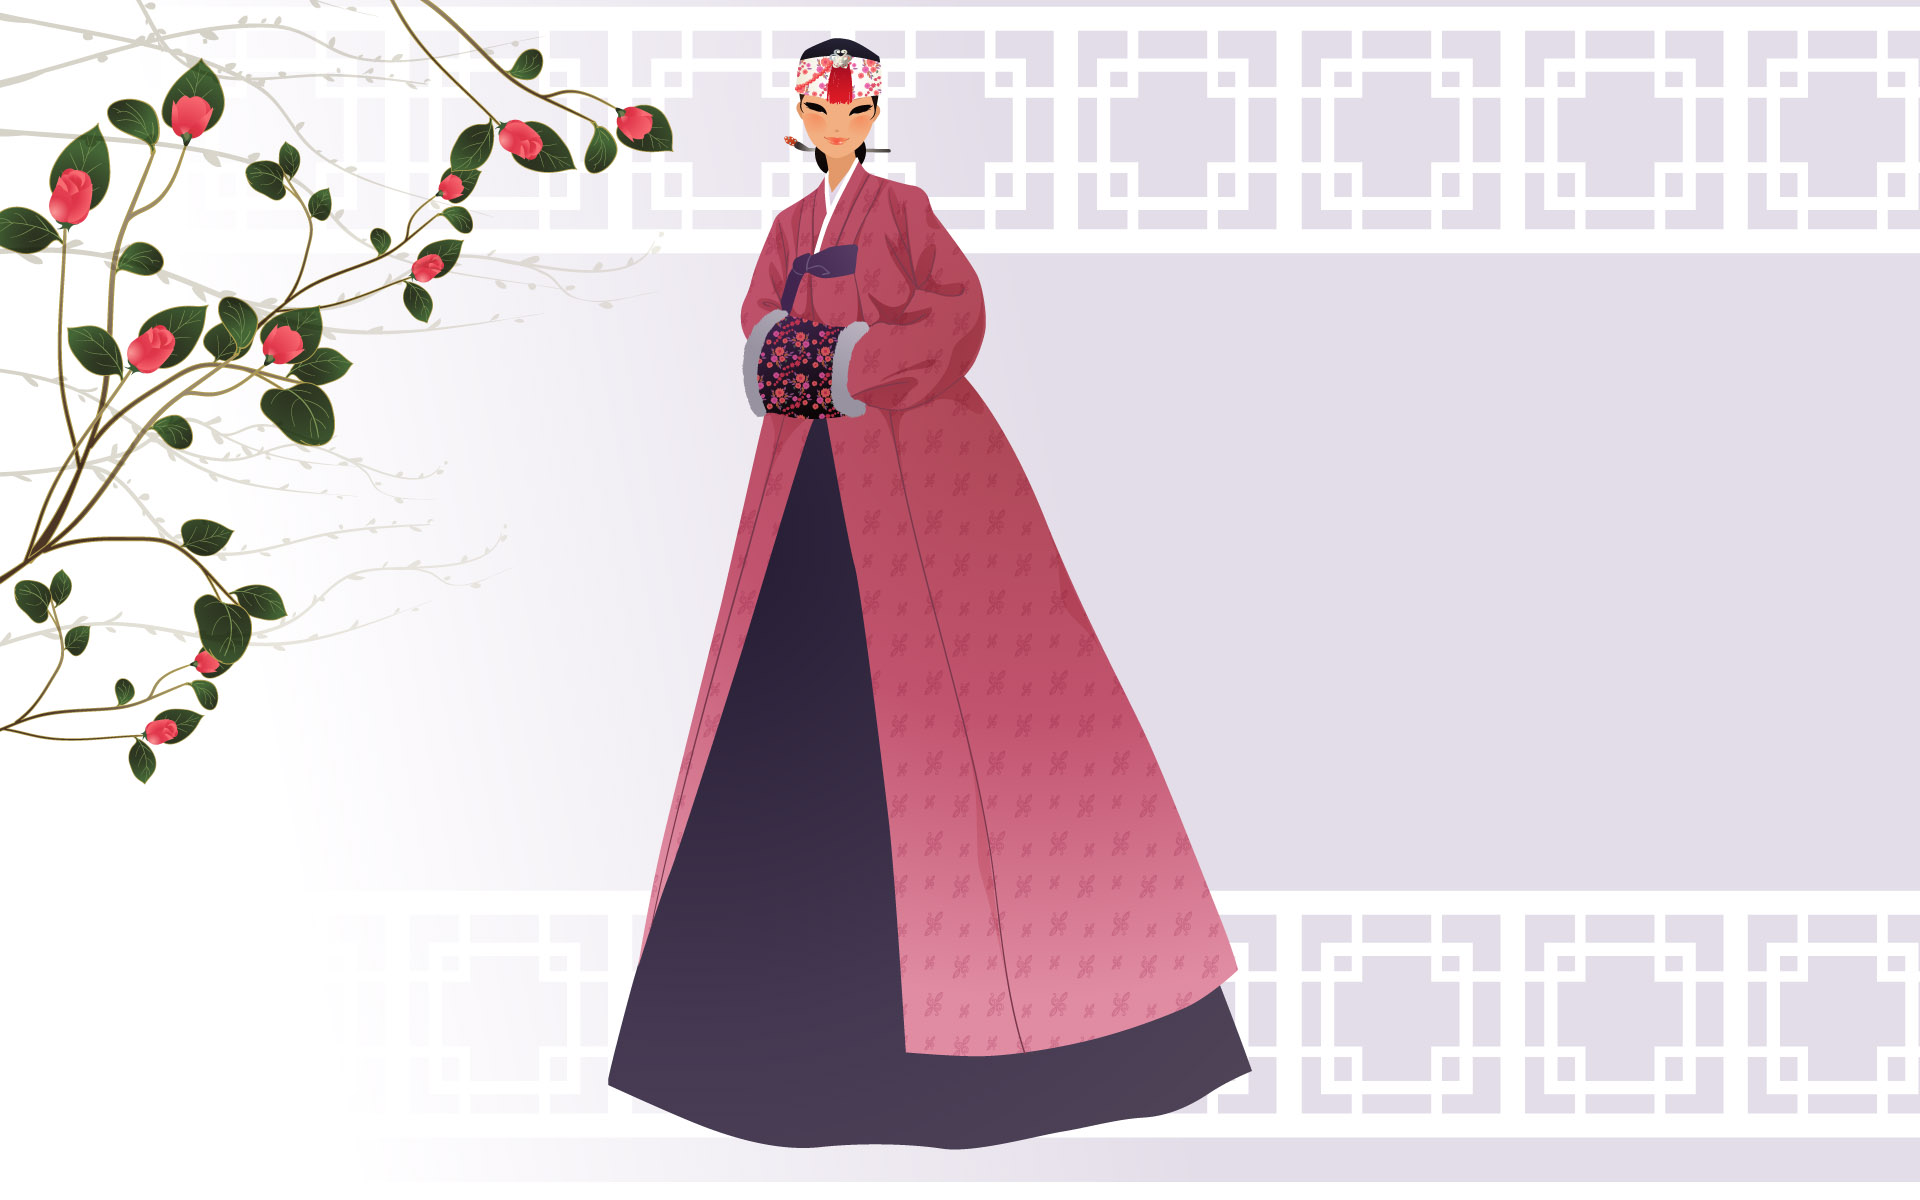 women, artistic, korea, traditional costume Image for desktop